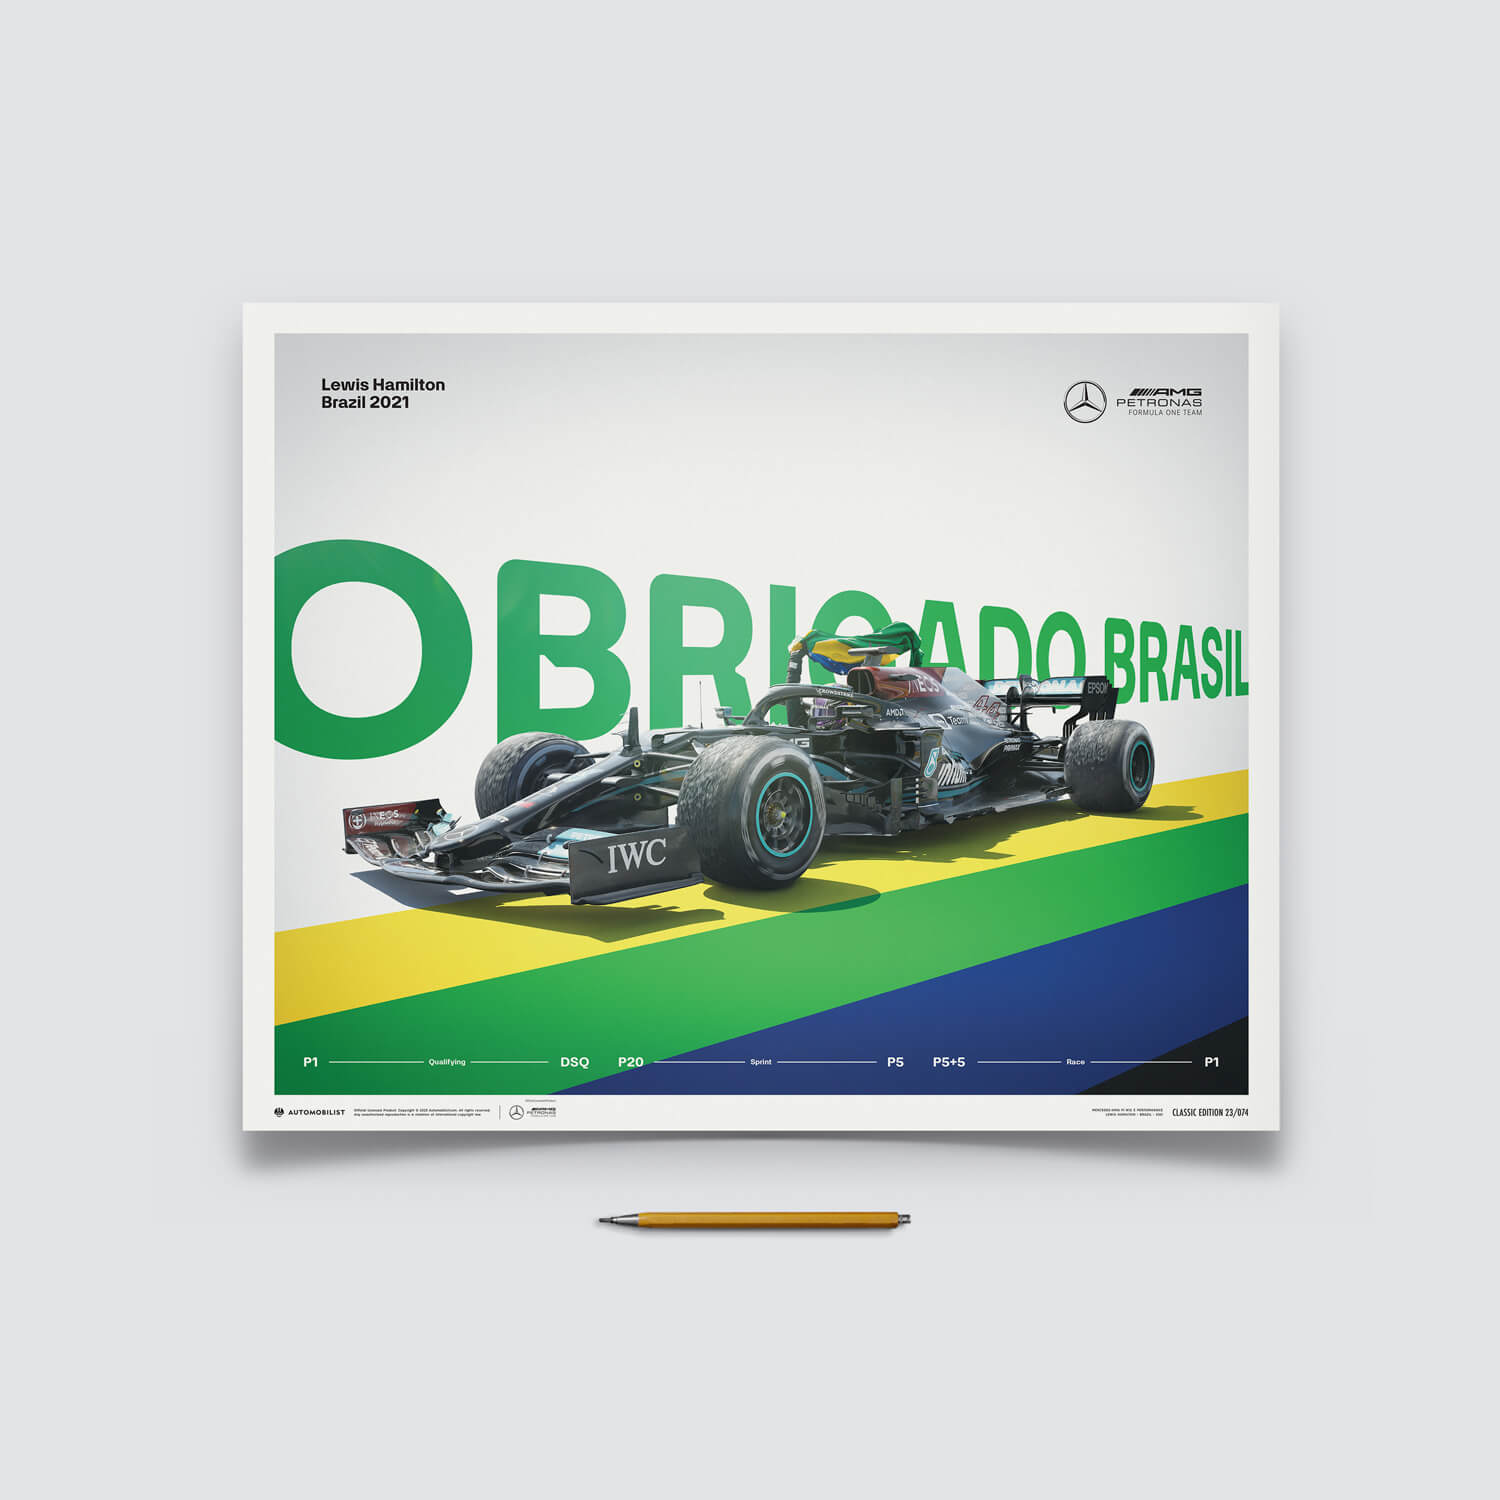 Mercedes-AMG Petronas F1 Team - Lewis Hamilton - Obrigado Brasil - 2021